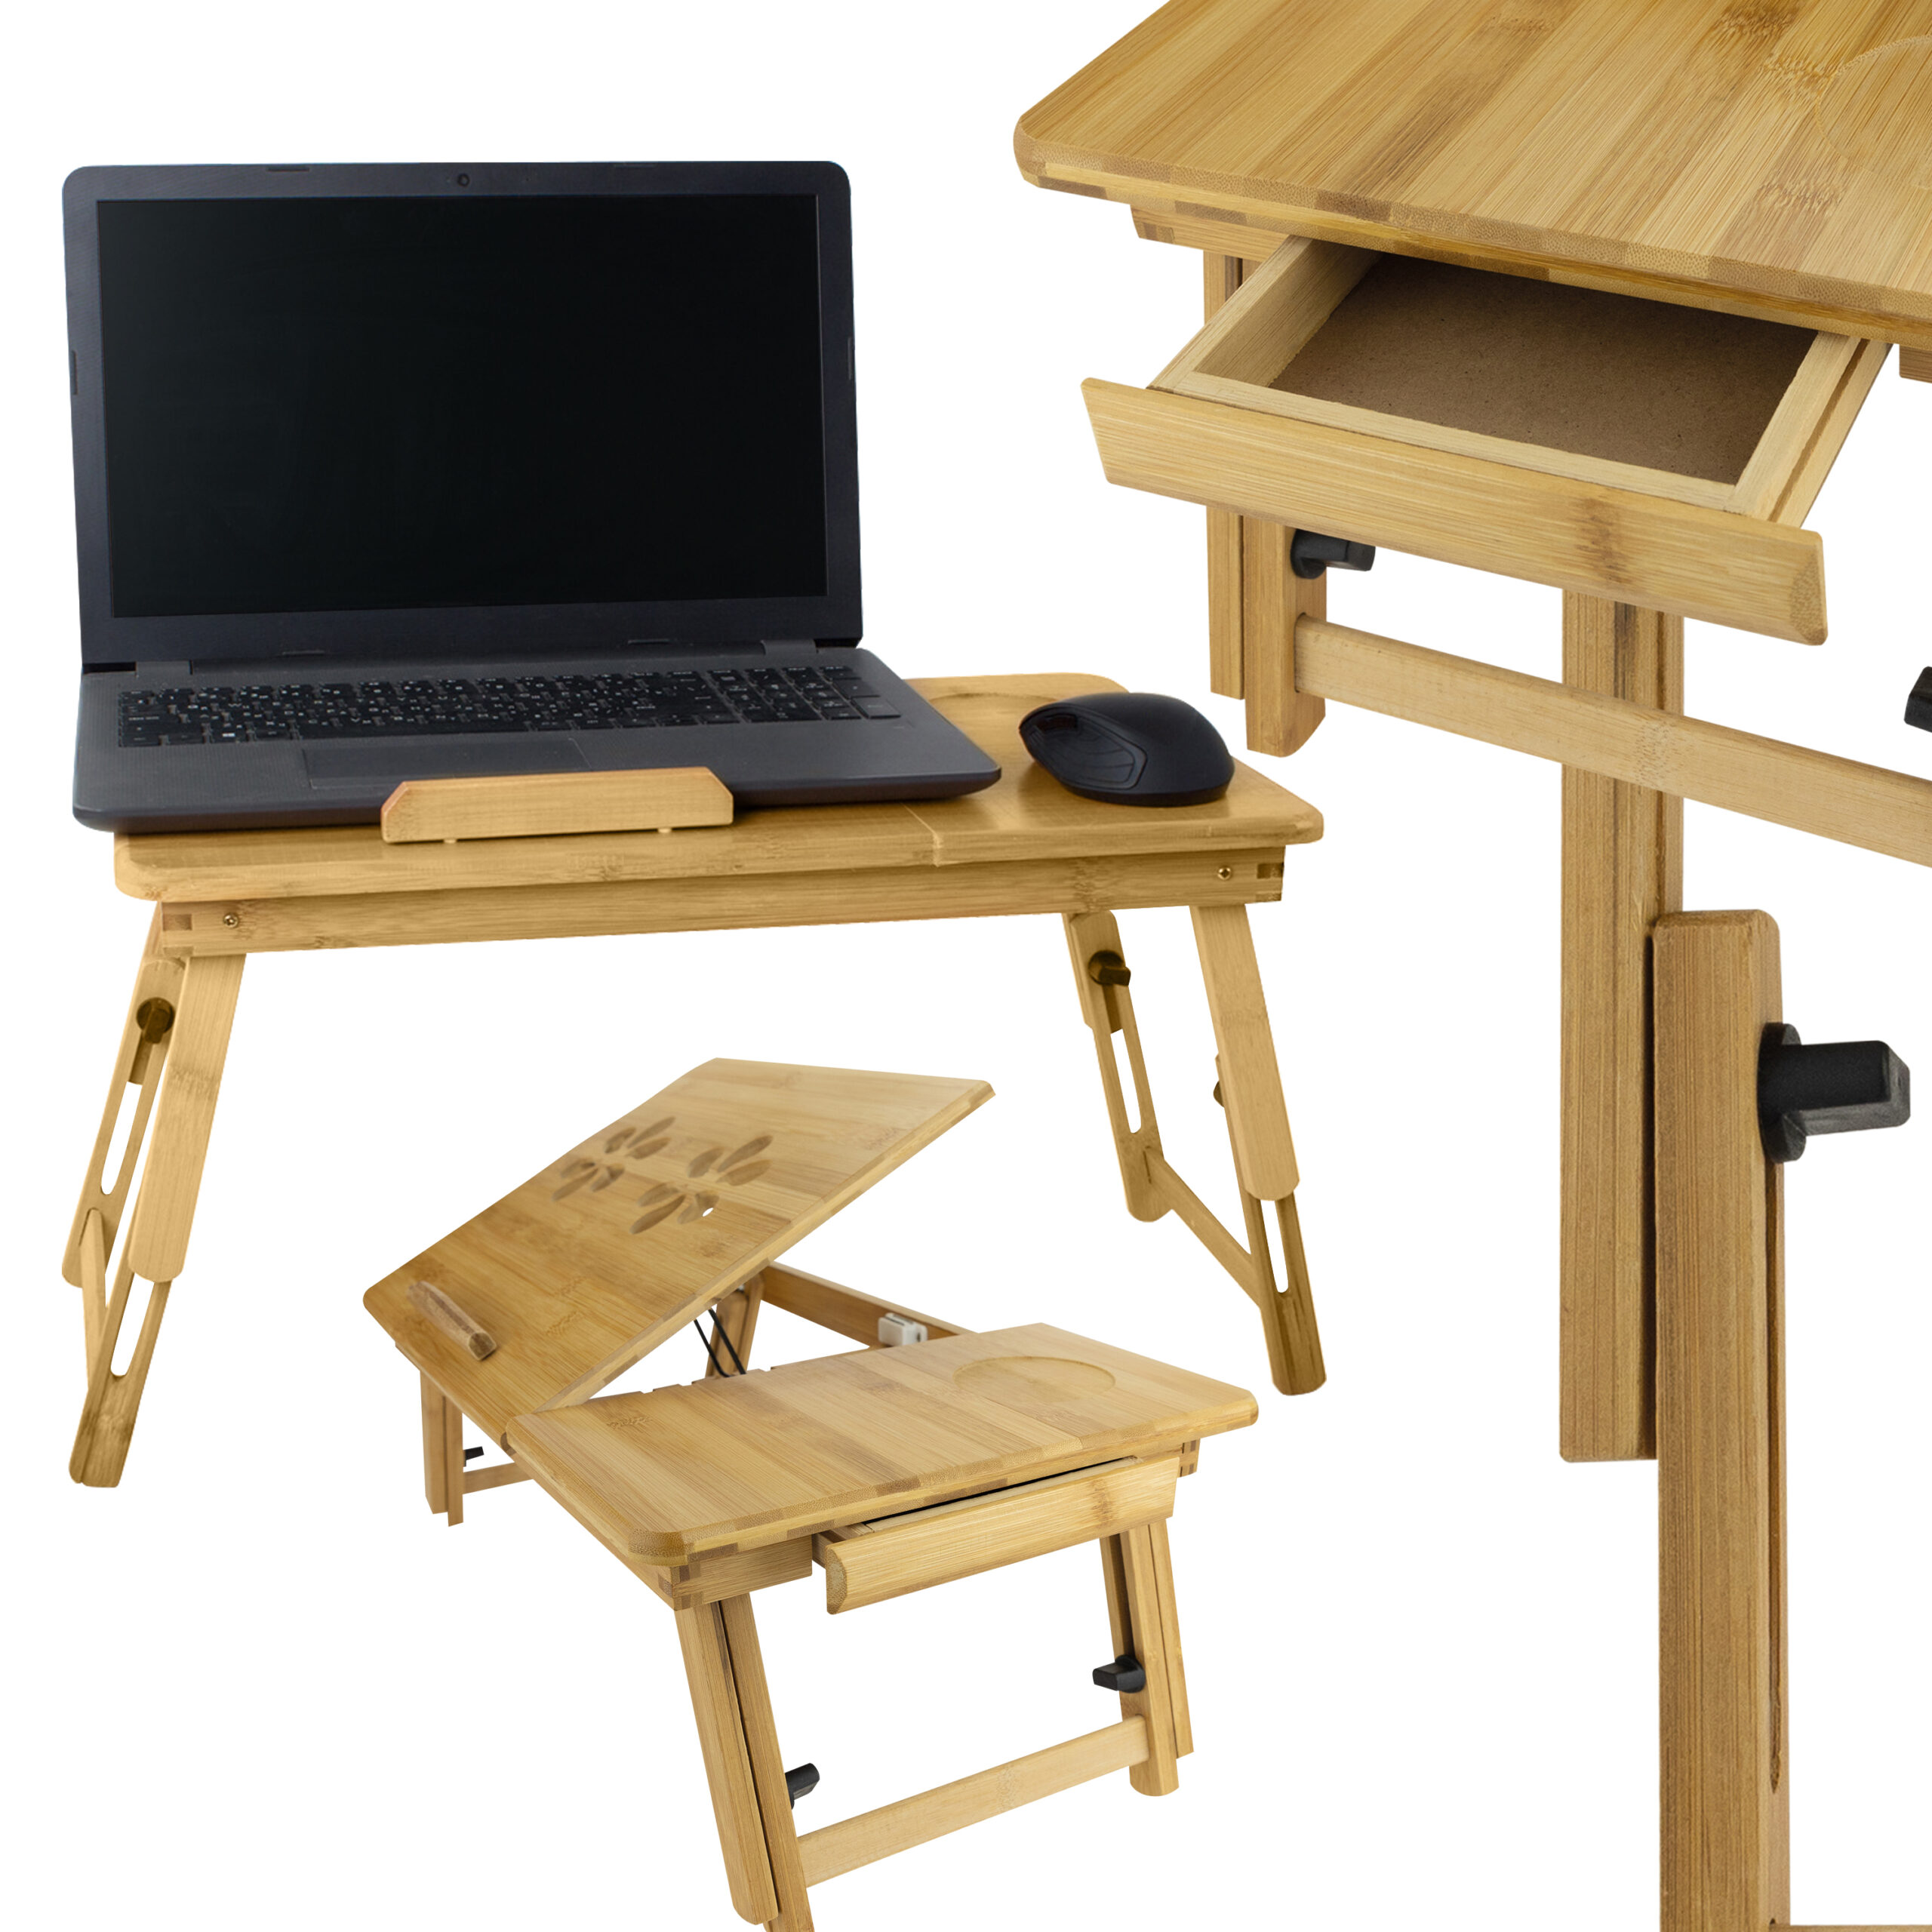 Drewniany składany stolik pod laptopa 7454_16